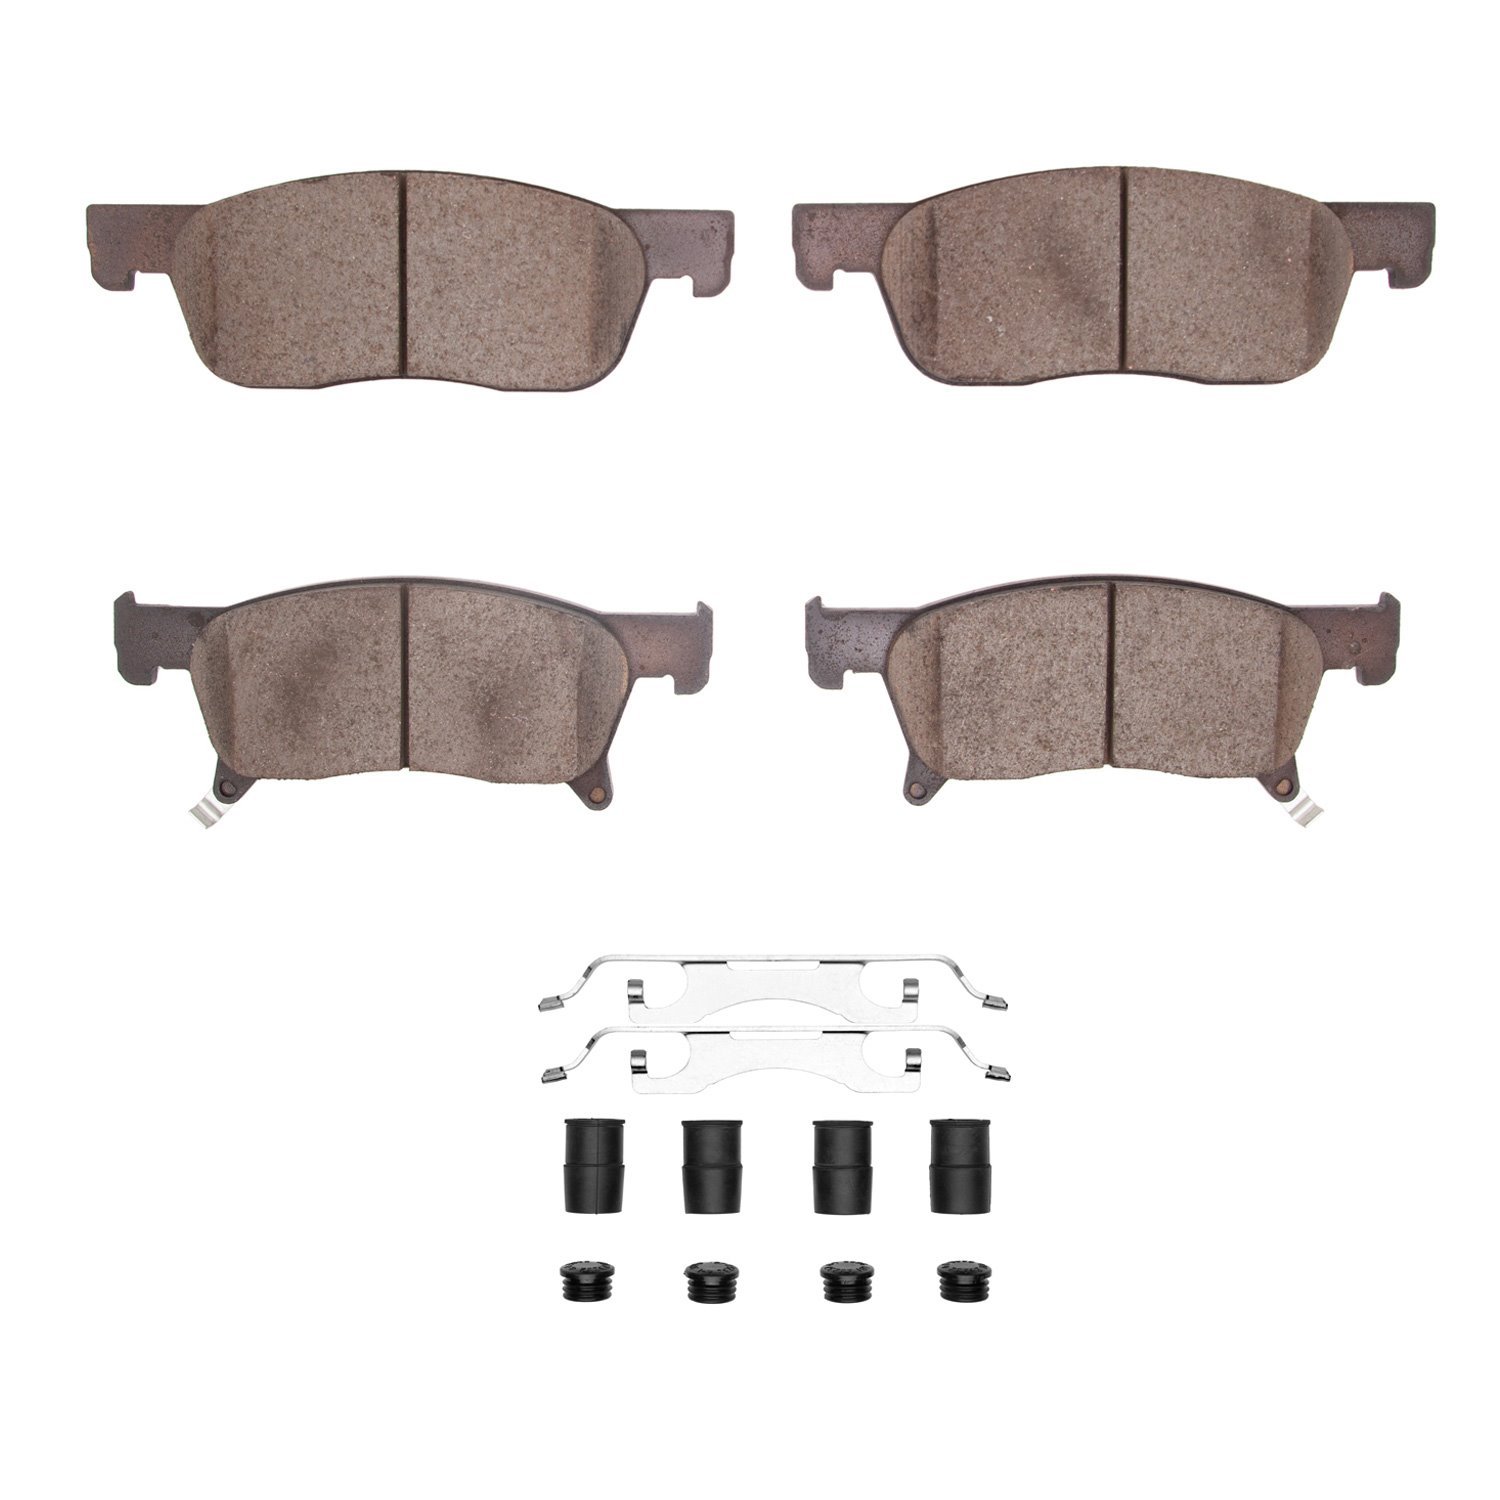 1551-2170-01 5000 Advanced Ceramic Brake Pads & Hardware Kit, Fits Select Subaru, Position: Front